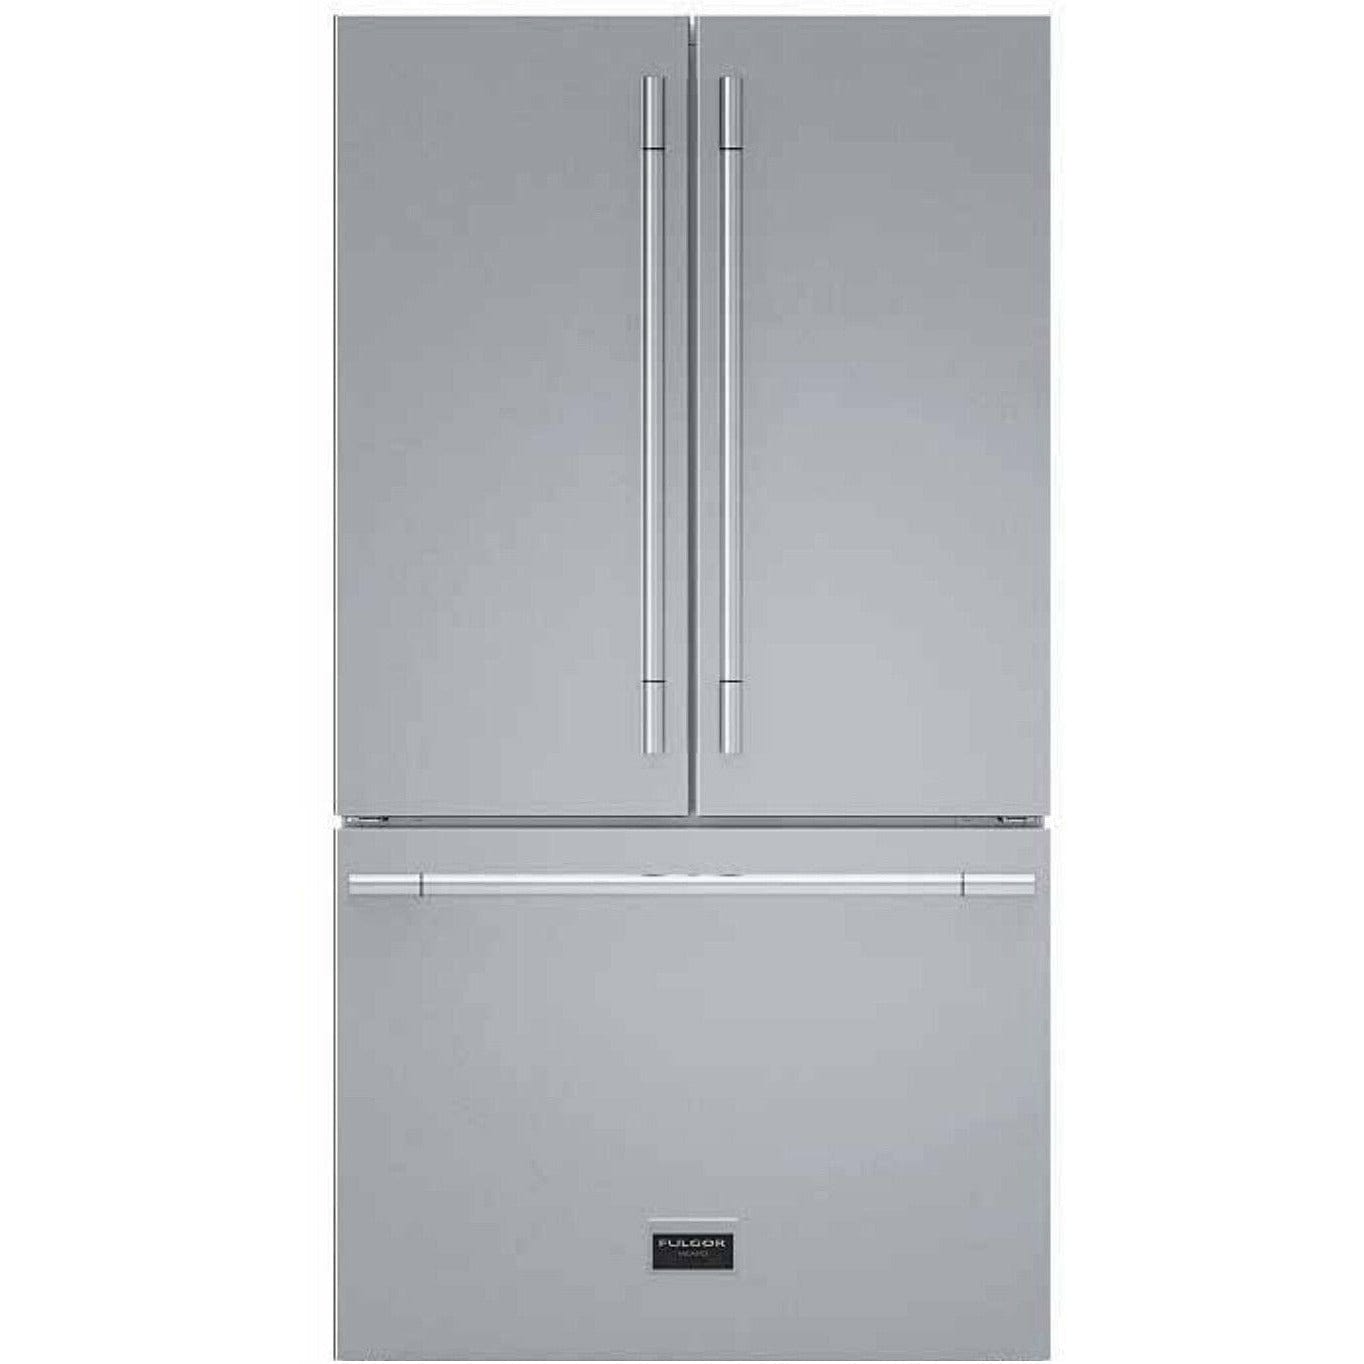 Fulgor Milano 36" Freestanding Counter Depth French Door Refrigerator with 19.86 cu. Ft. Total Capacity - F6FBM36S2 Refrigerators F6FBM36S2 Luxury Appliances Direct